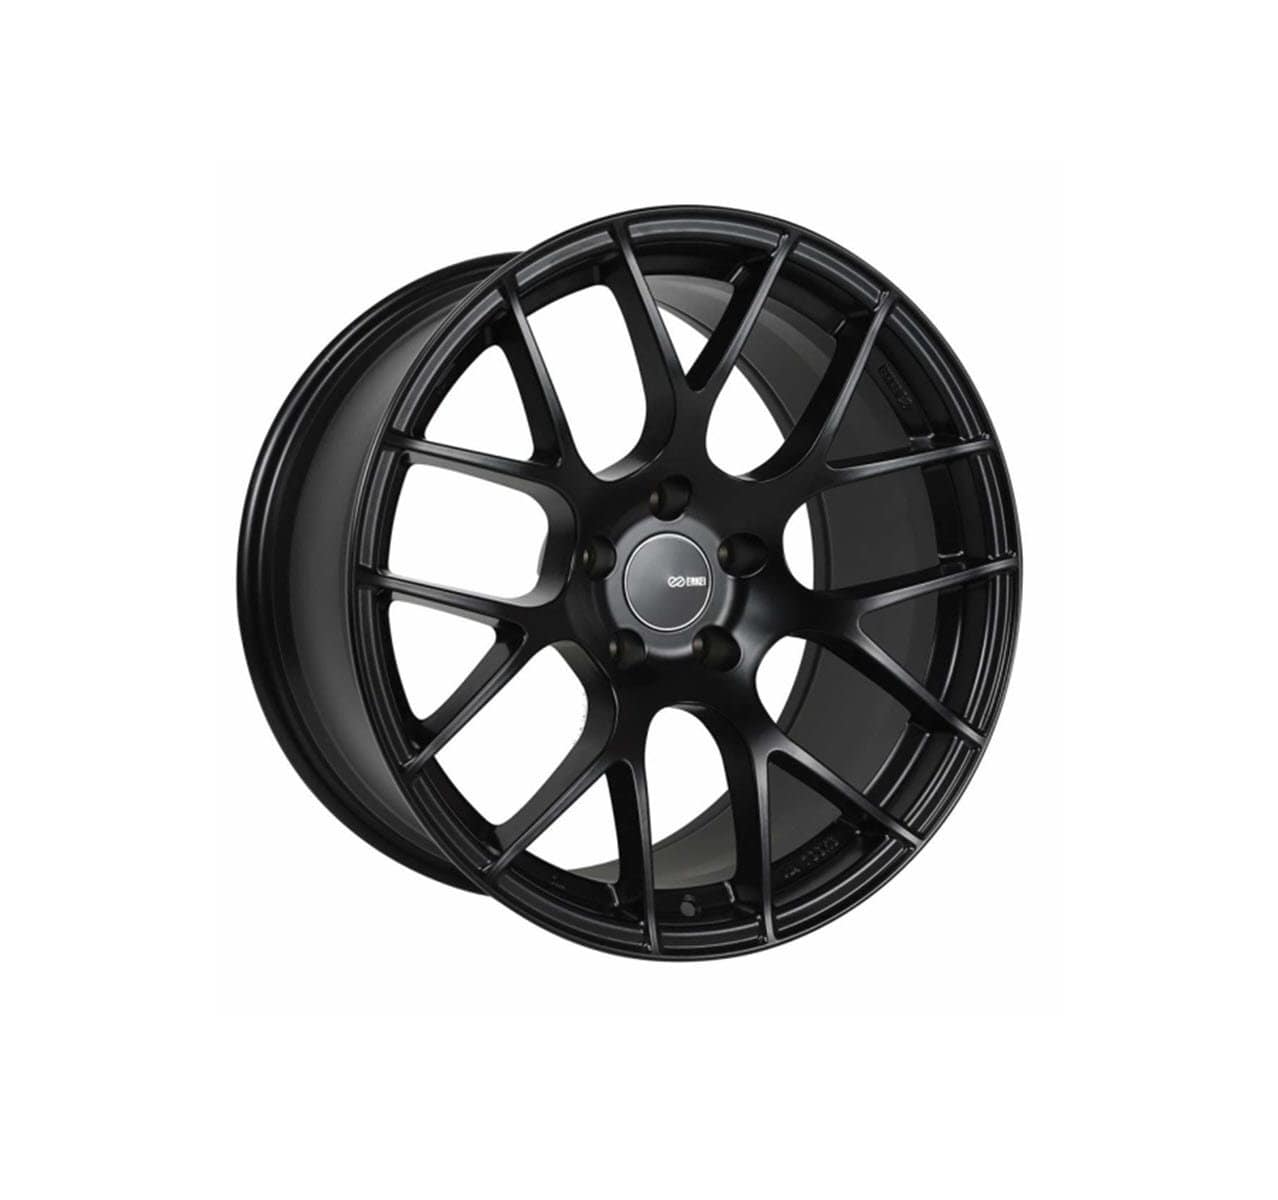 Enkei Raijin 18x9.5 5x114.3 35mm - Black Wheel - Dirty Racing Products